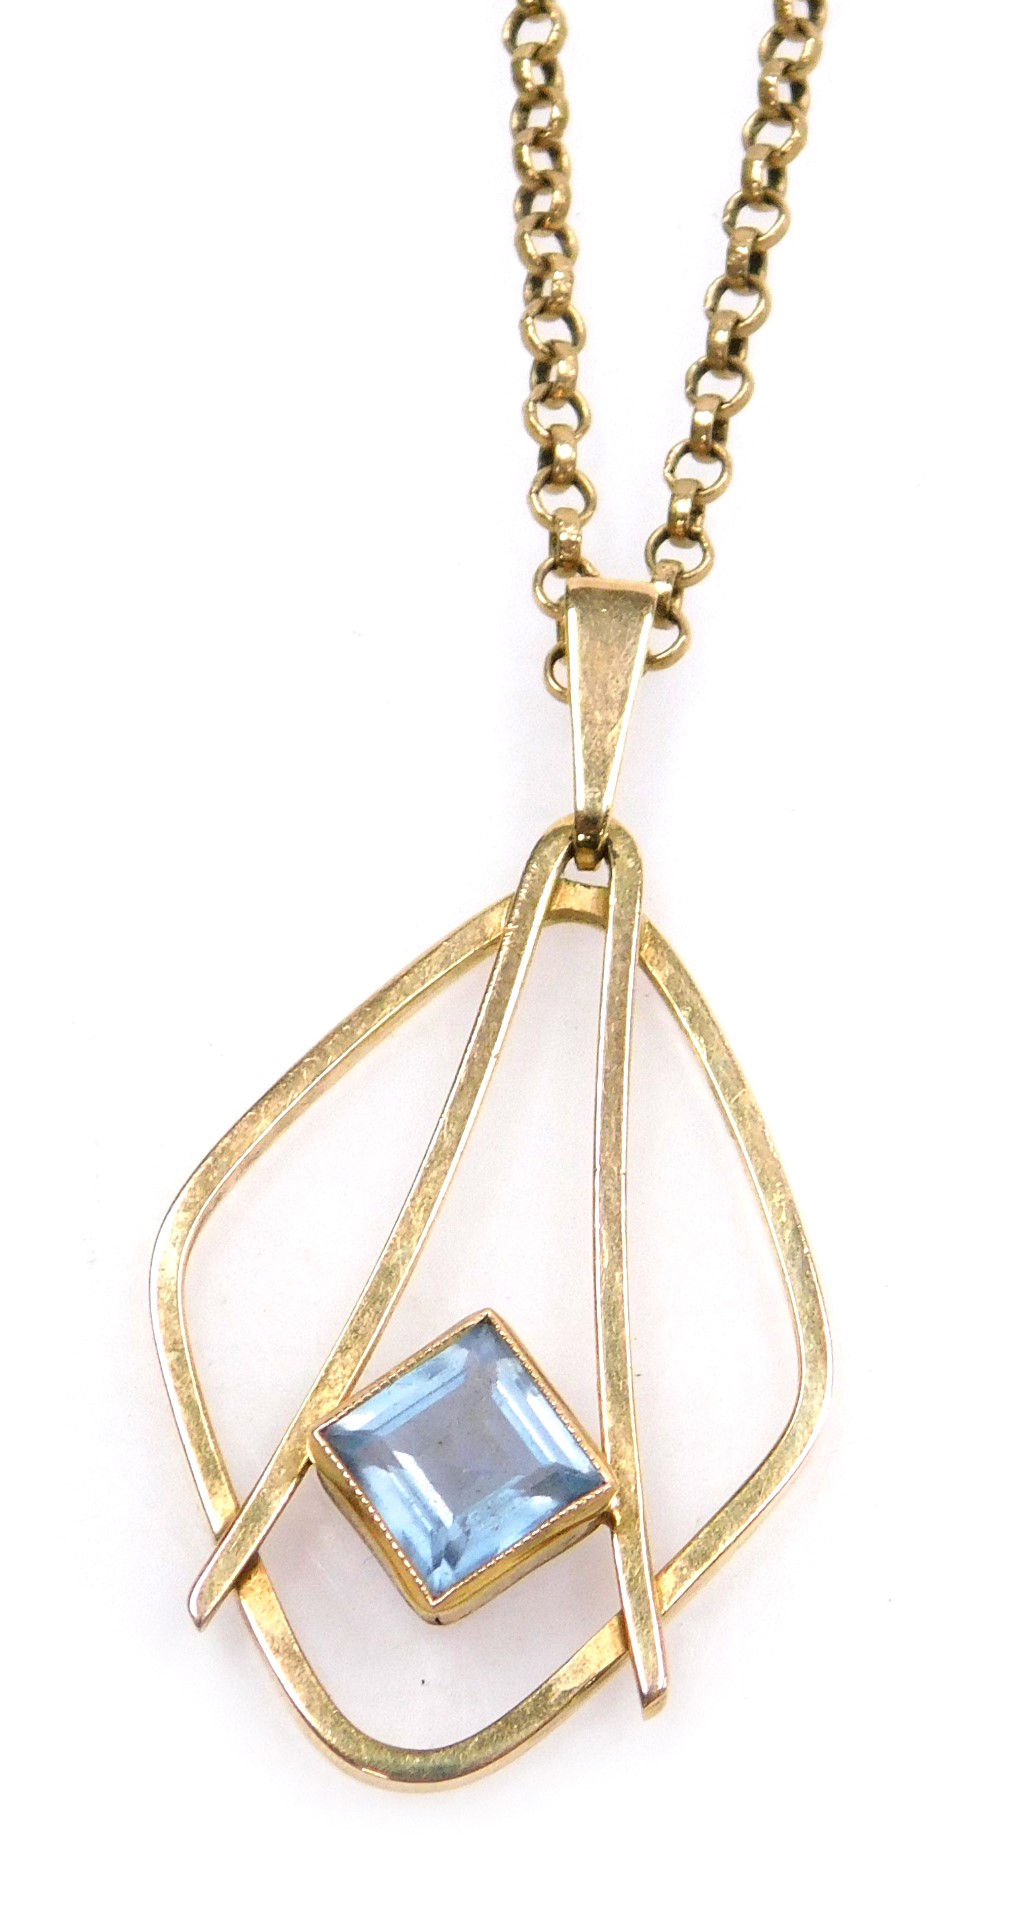 A modernist 9ct gold and pale blue gem set pendant, possibly a topaz, on a belcher link neck chain,